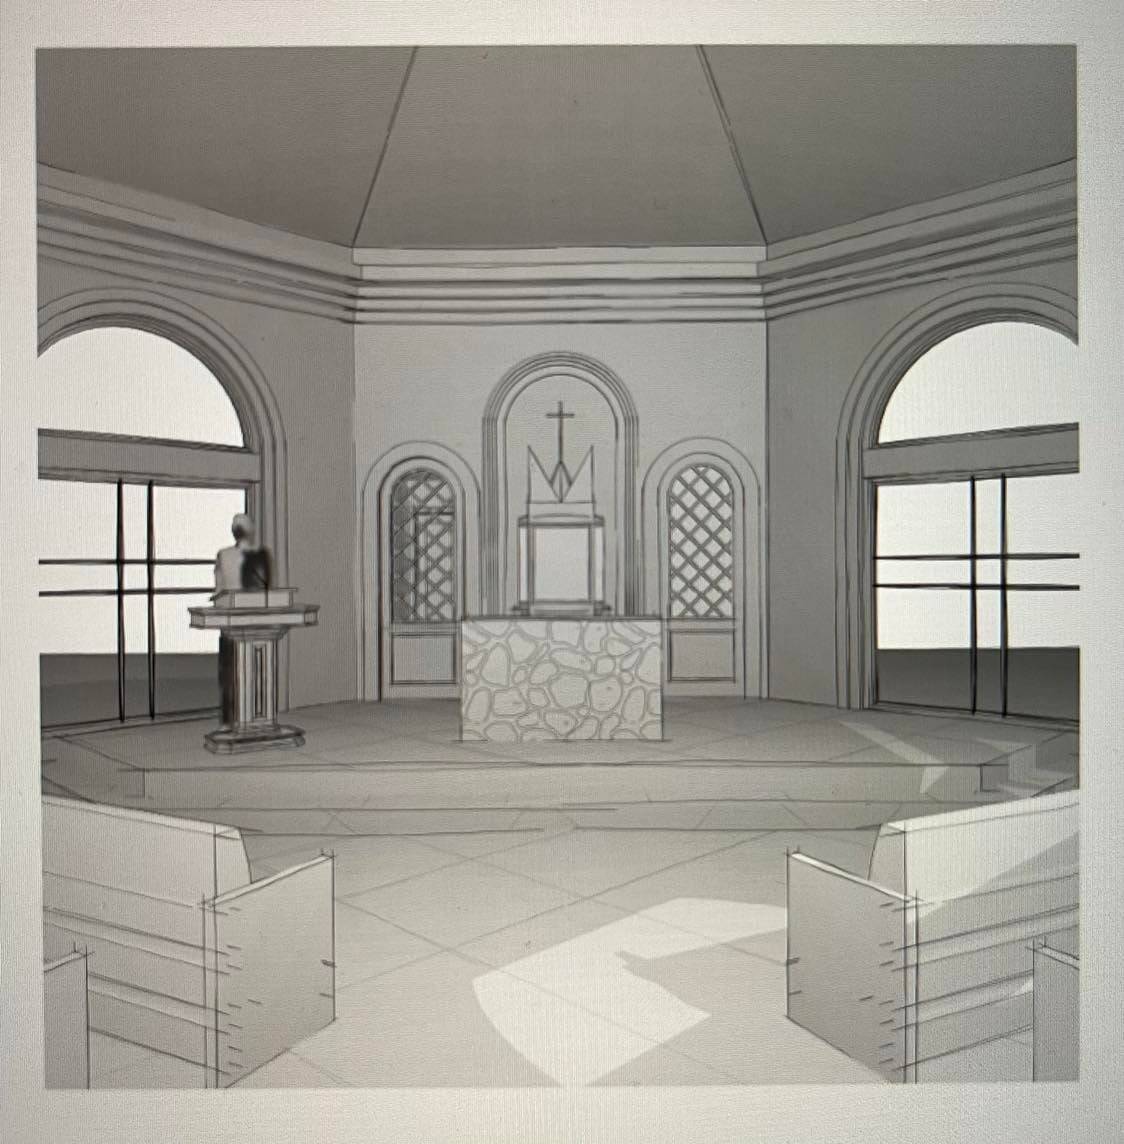 Grayscale artistic interior plan for the construction of St. Anthony's Church Santo Niño de Cebu Shrine